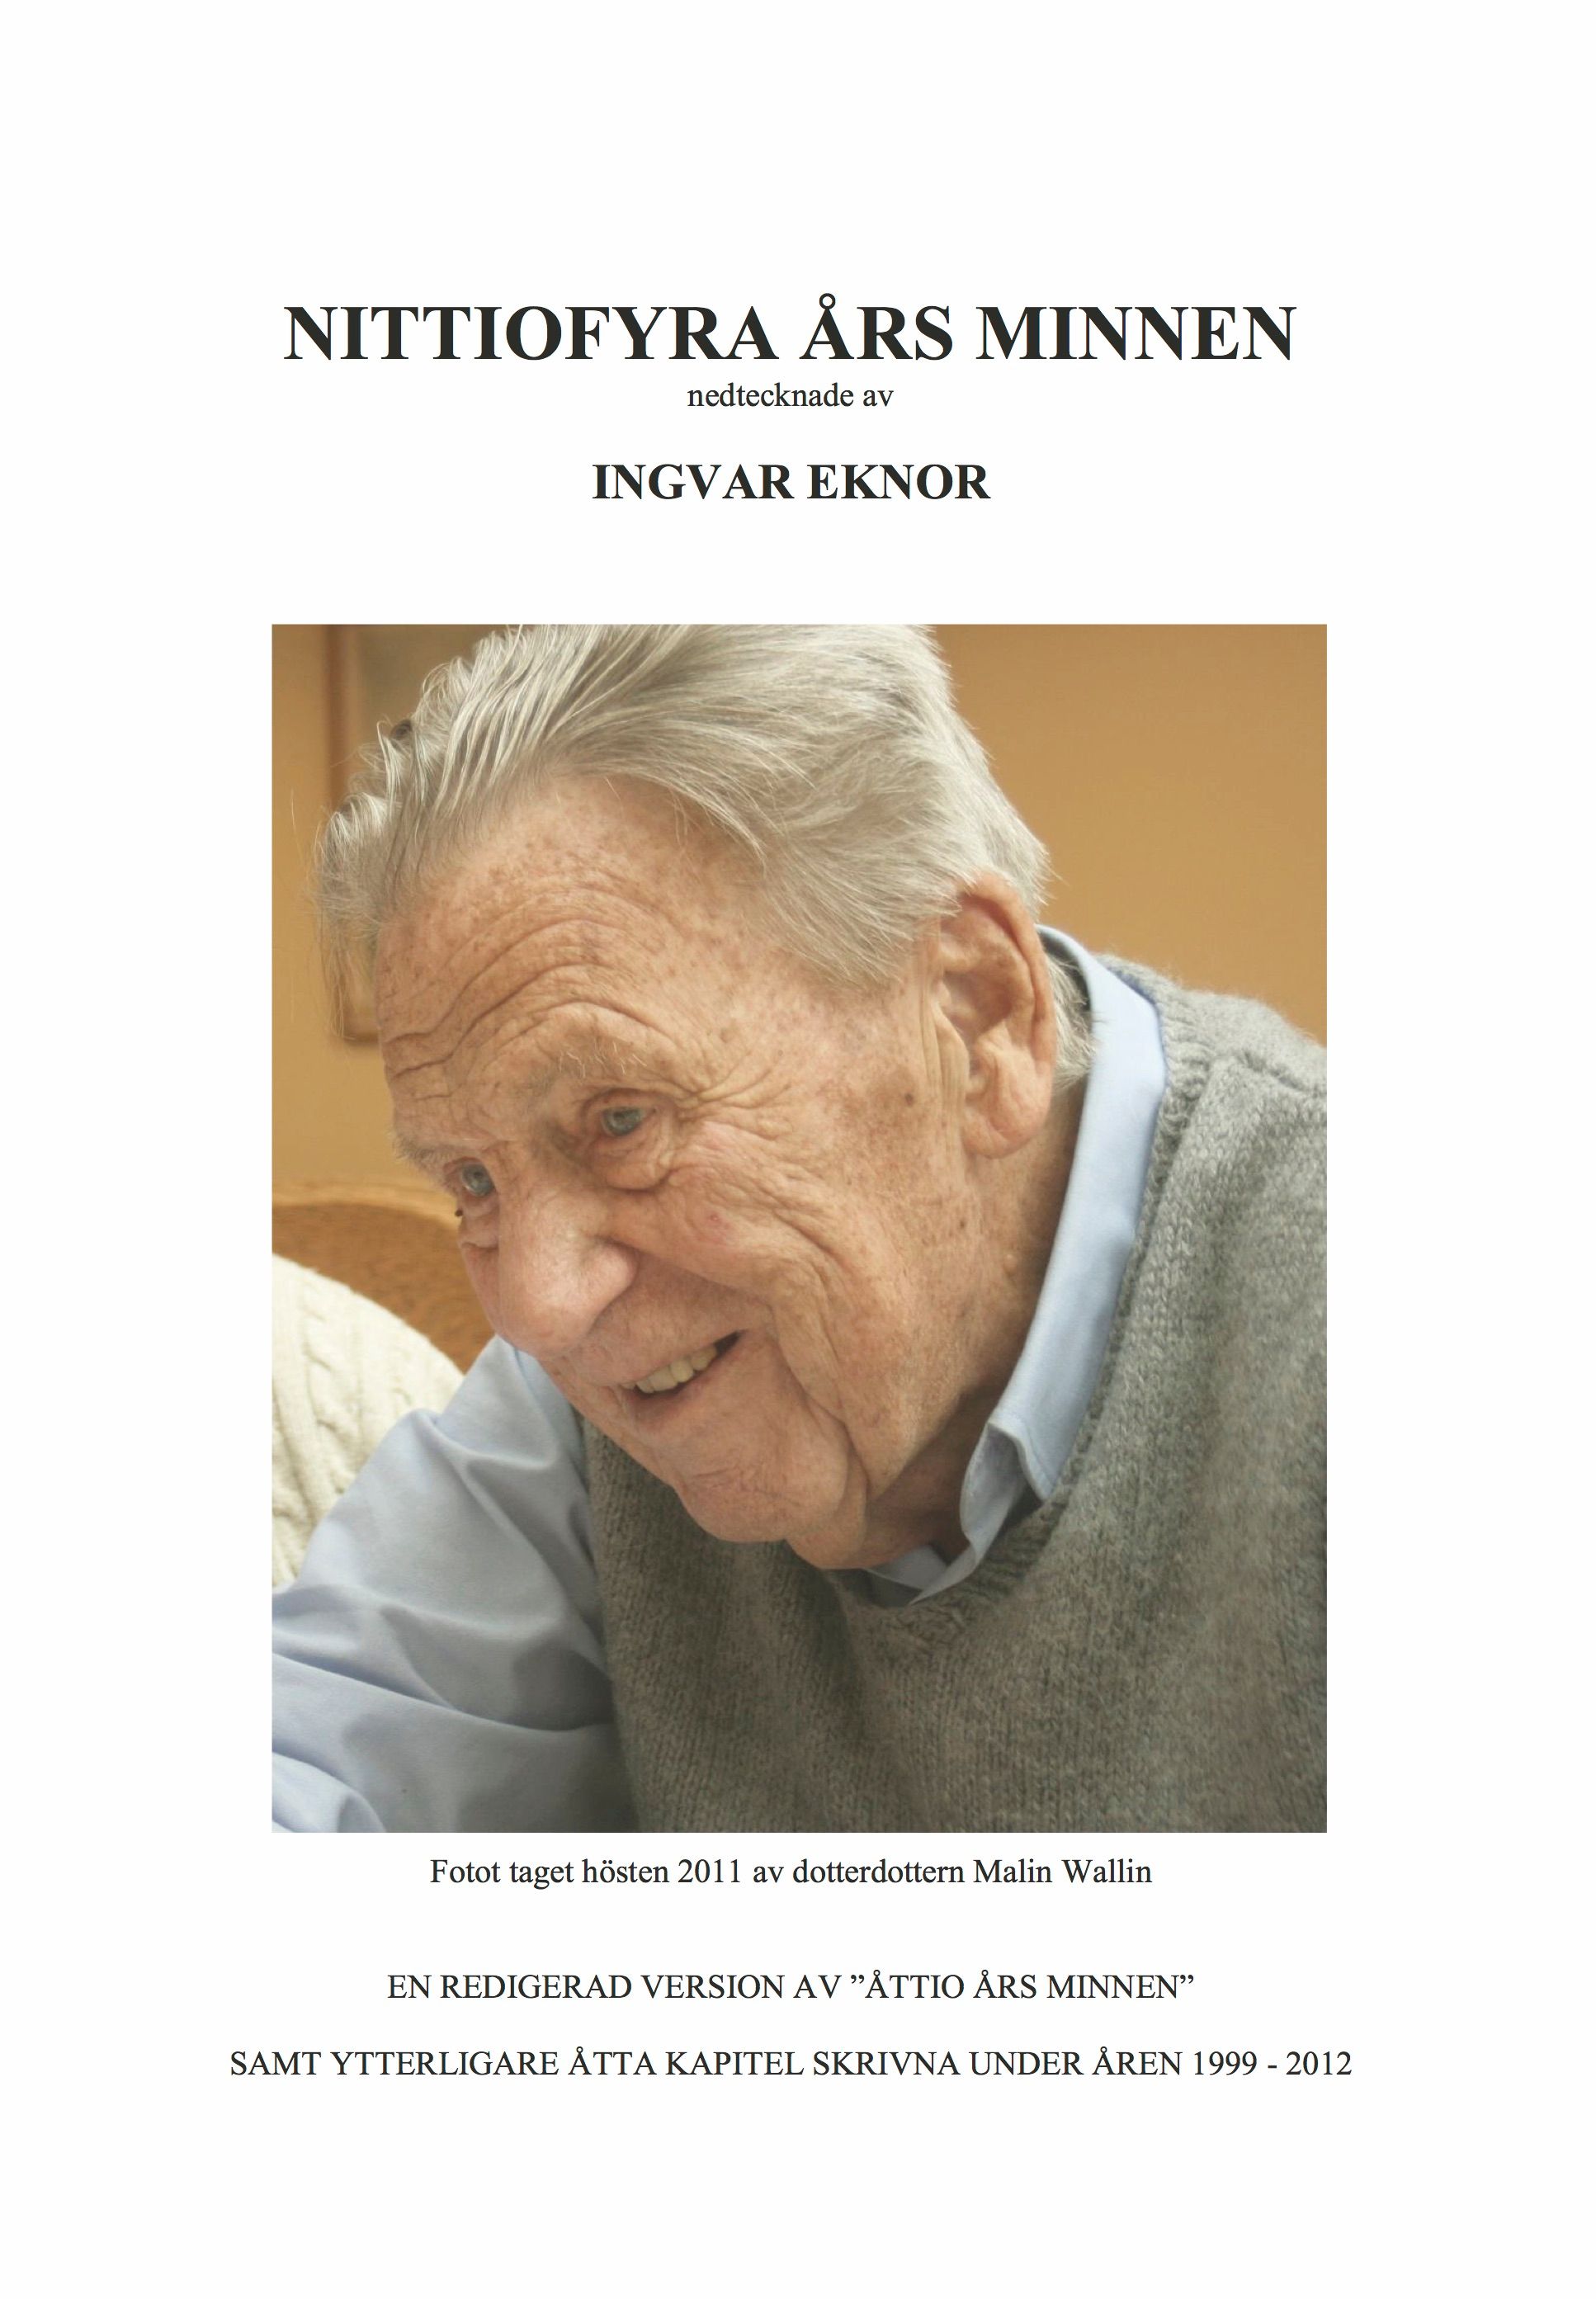 Nittiofyra års minnen, eBook by Ingvar Eknor